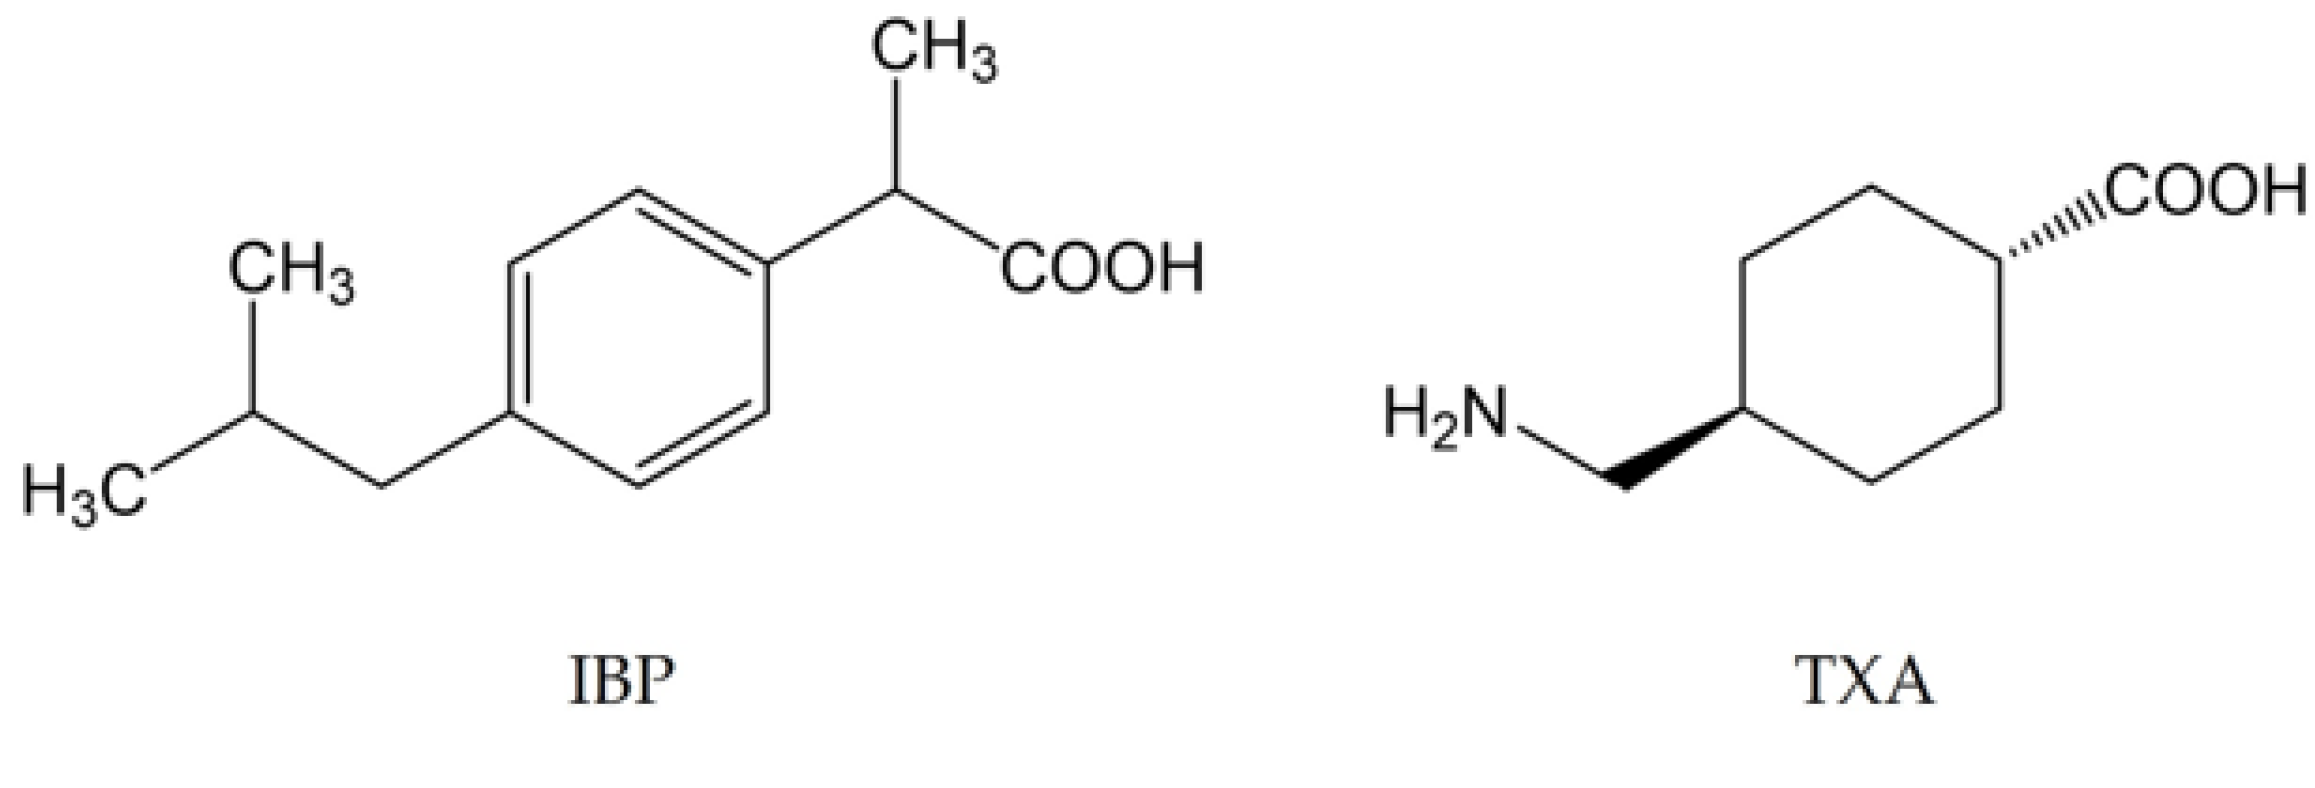 ibuprofen chemical structure